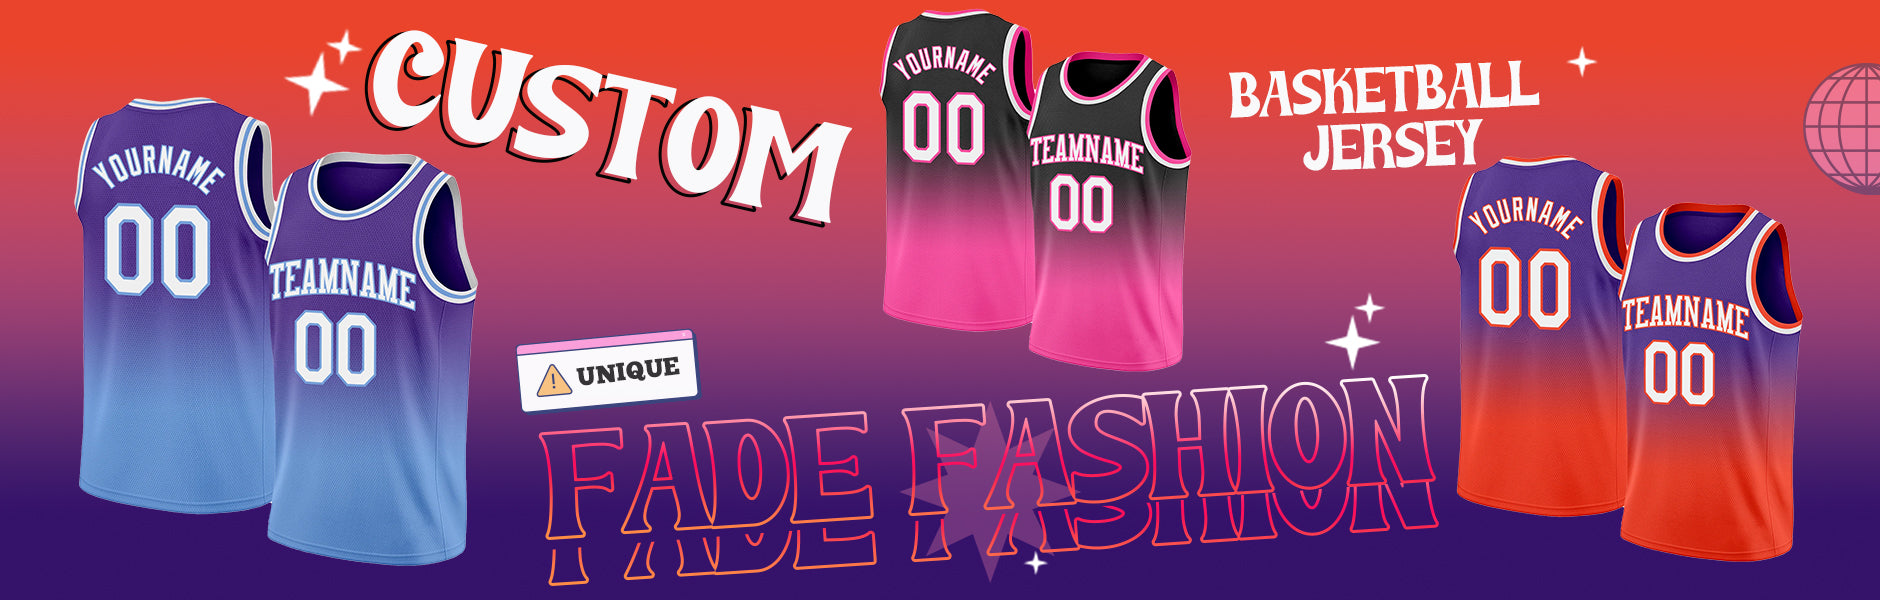 Custom Fade Fashion Basketball Jerseys, Game Uniforms